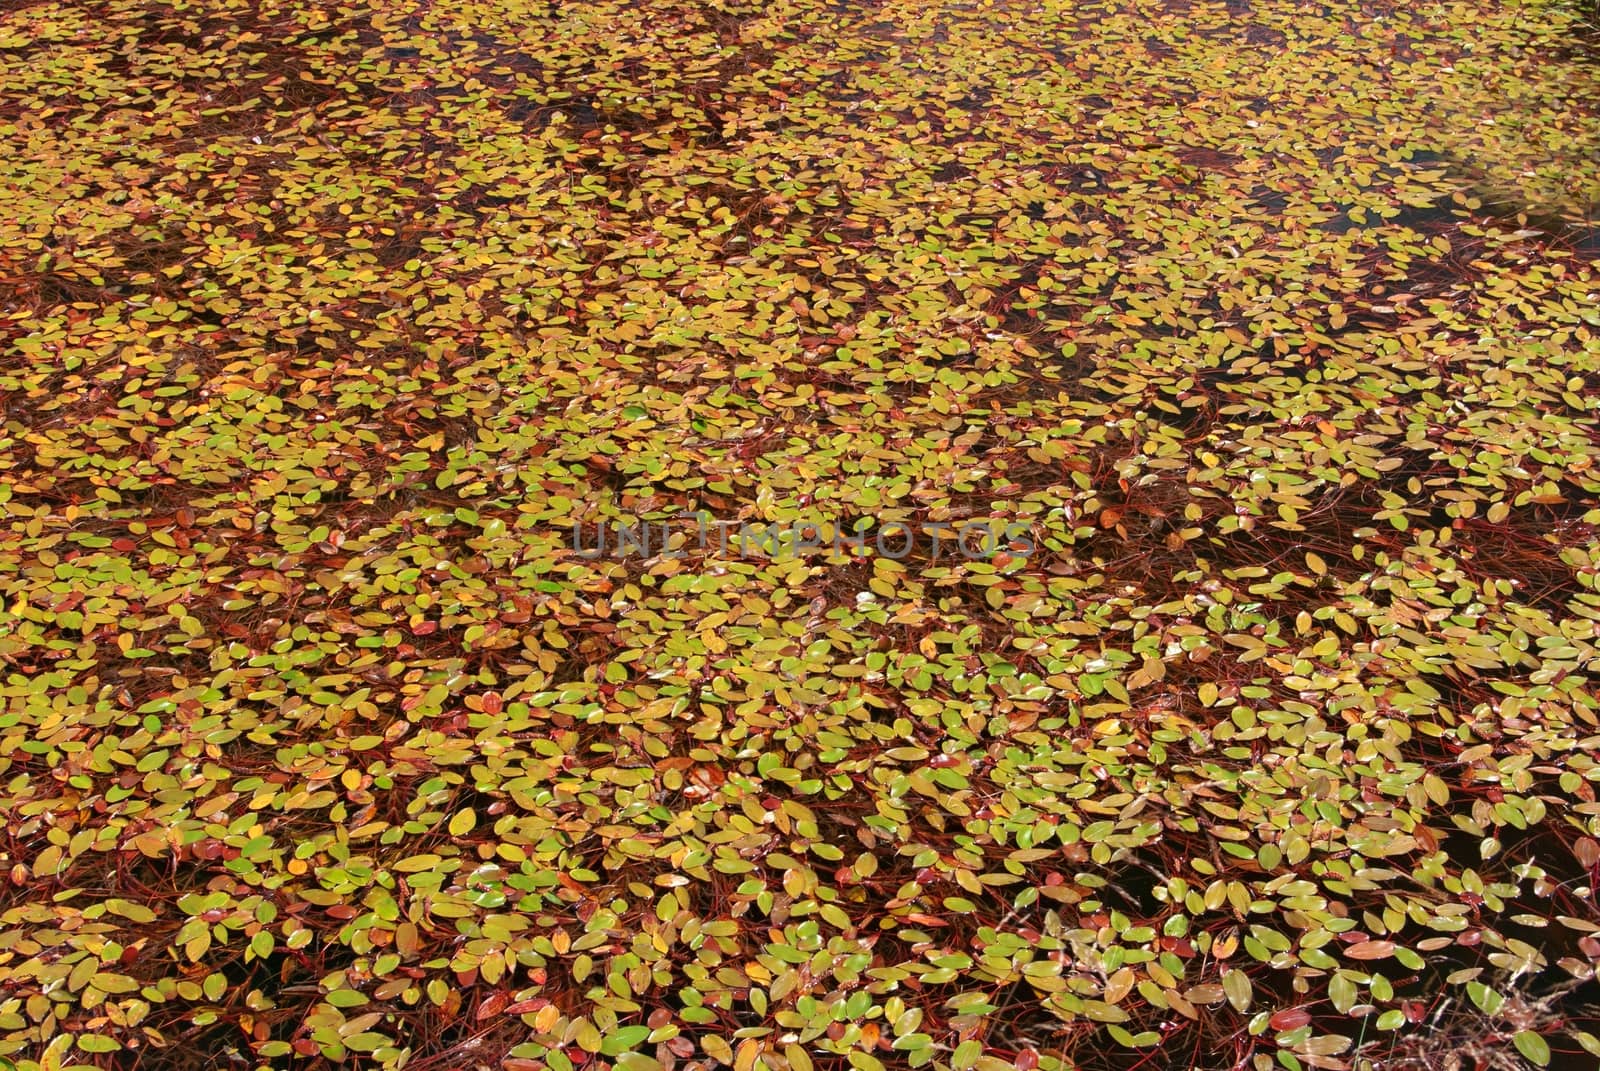 Leaves in swamp - texture by mitakag